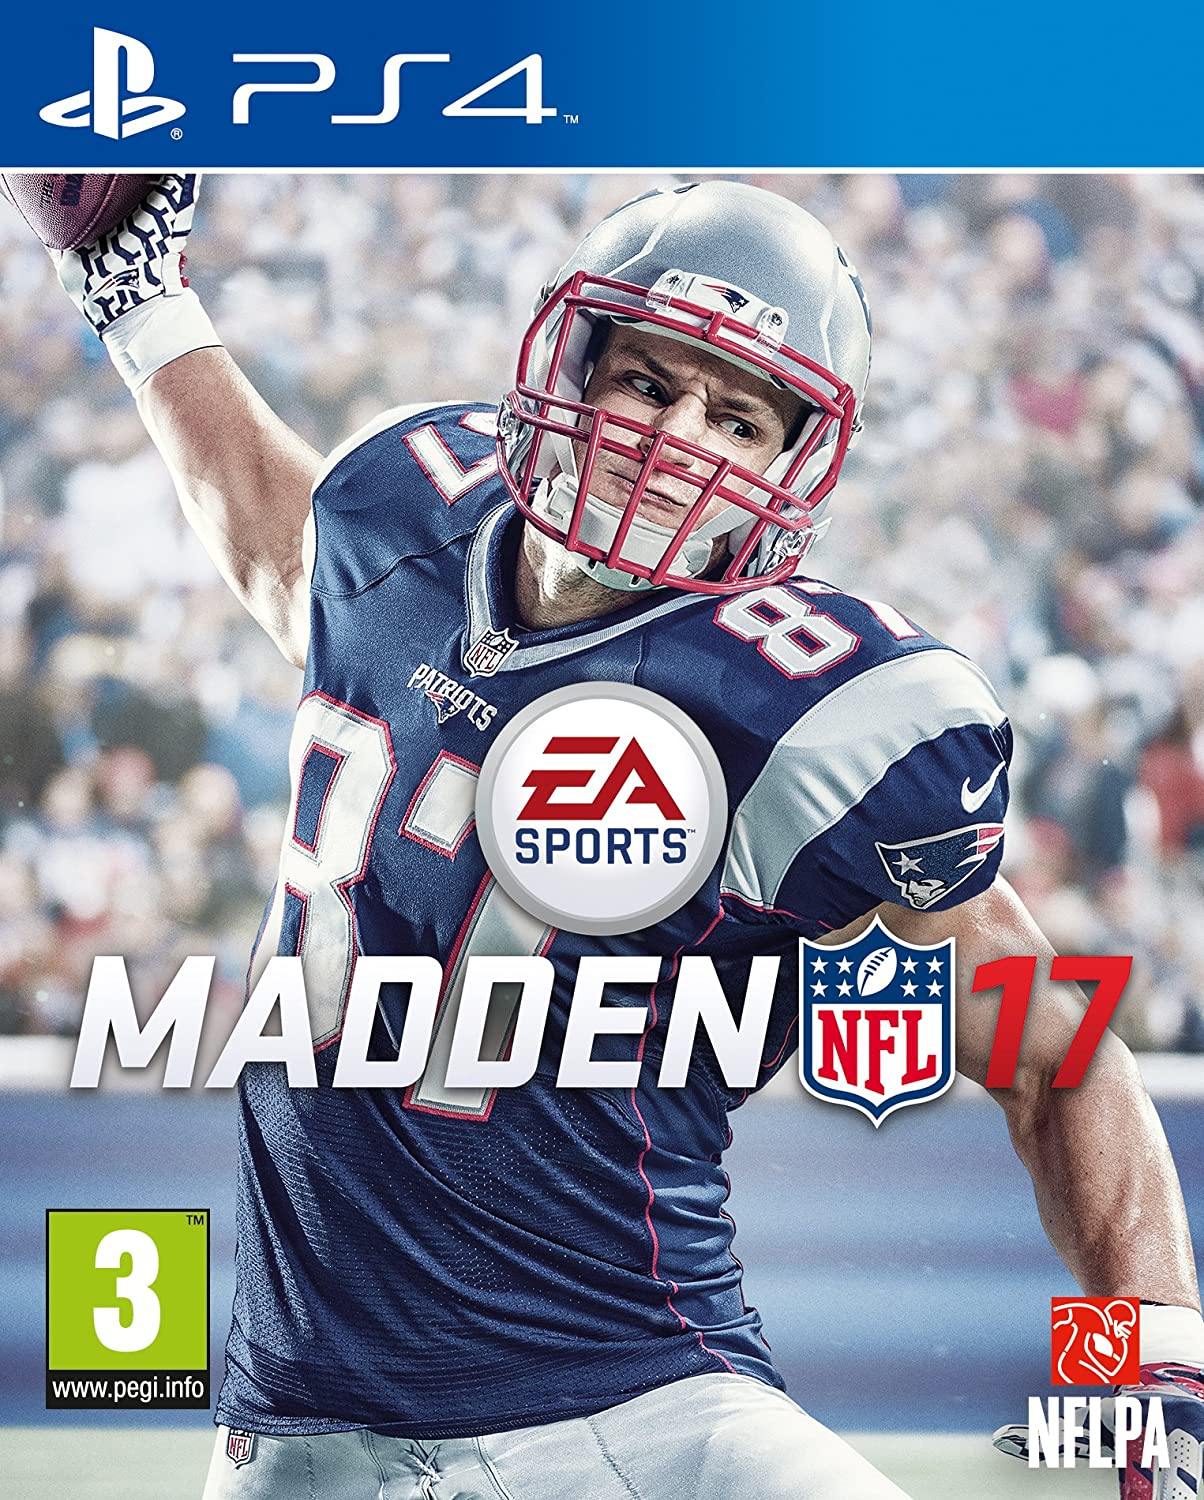 MADDEN (NFL) 17 PS4 GAME BRAND NEW SEALED PACK - saynama